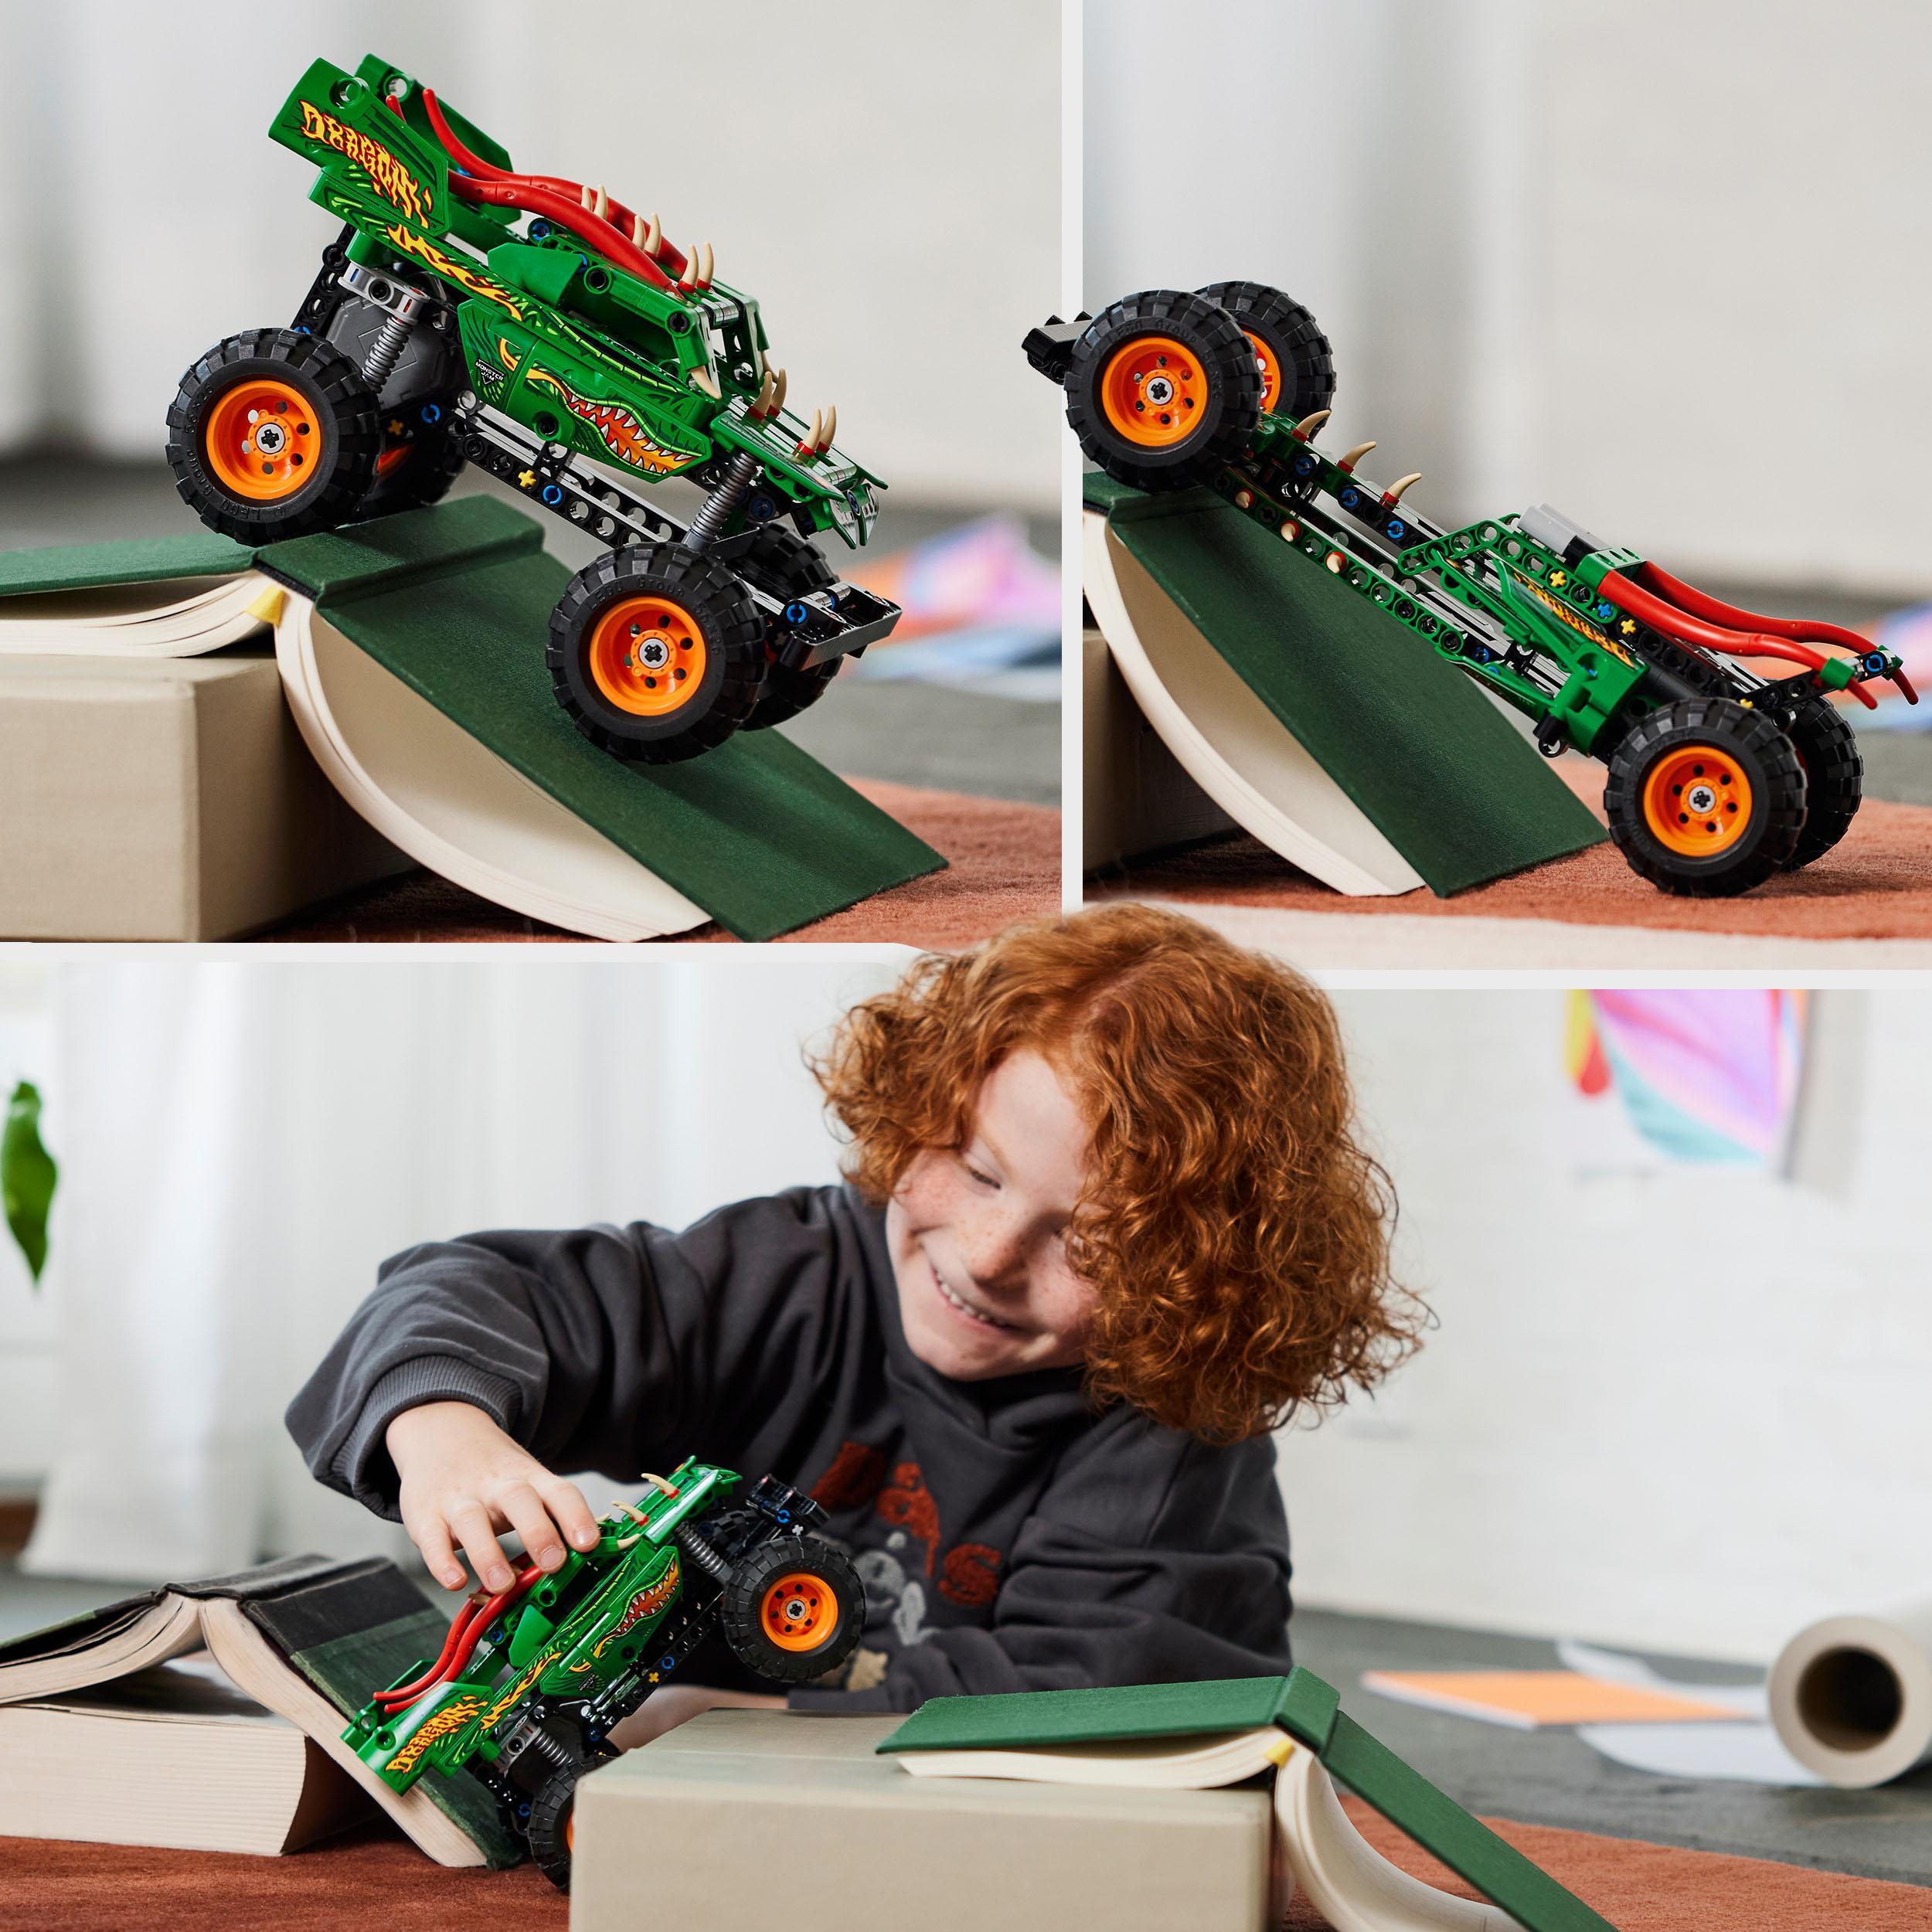 Lego technic 42149 monster jam dragon, set 2 in 1 con pull-back, auto offroad monster truck e macchina giocattolo buggy - LEGO TECHNIC